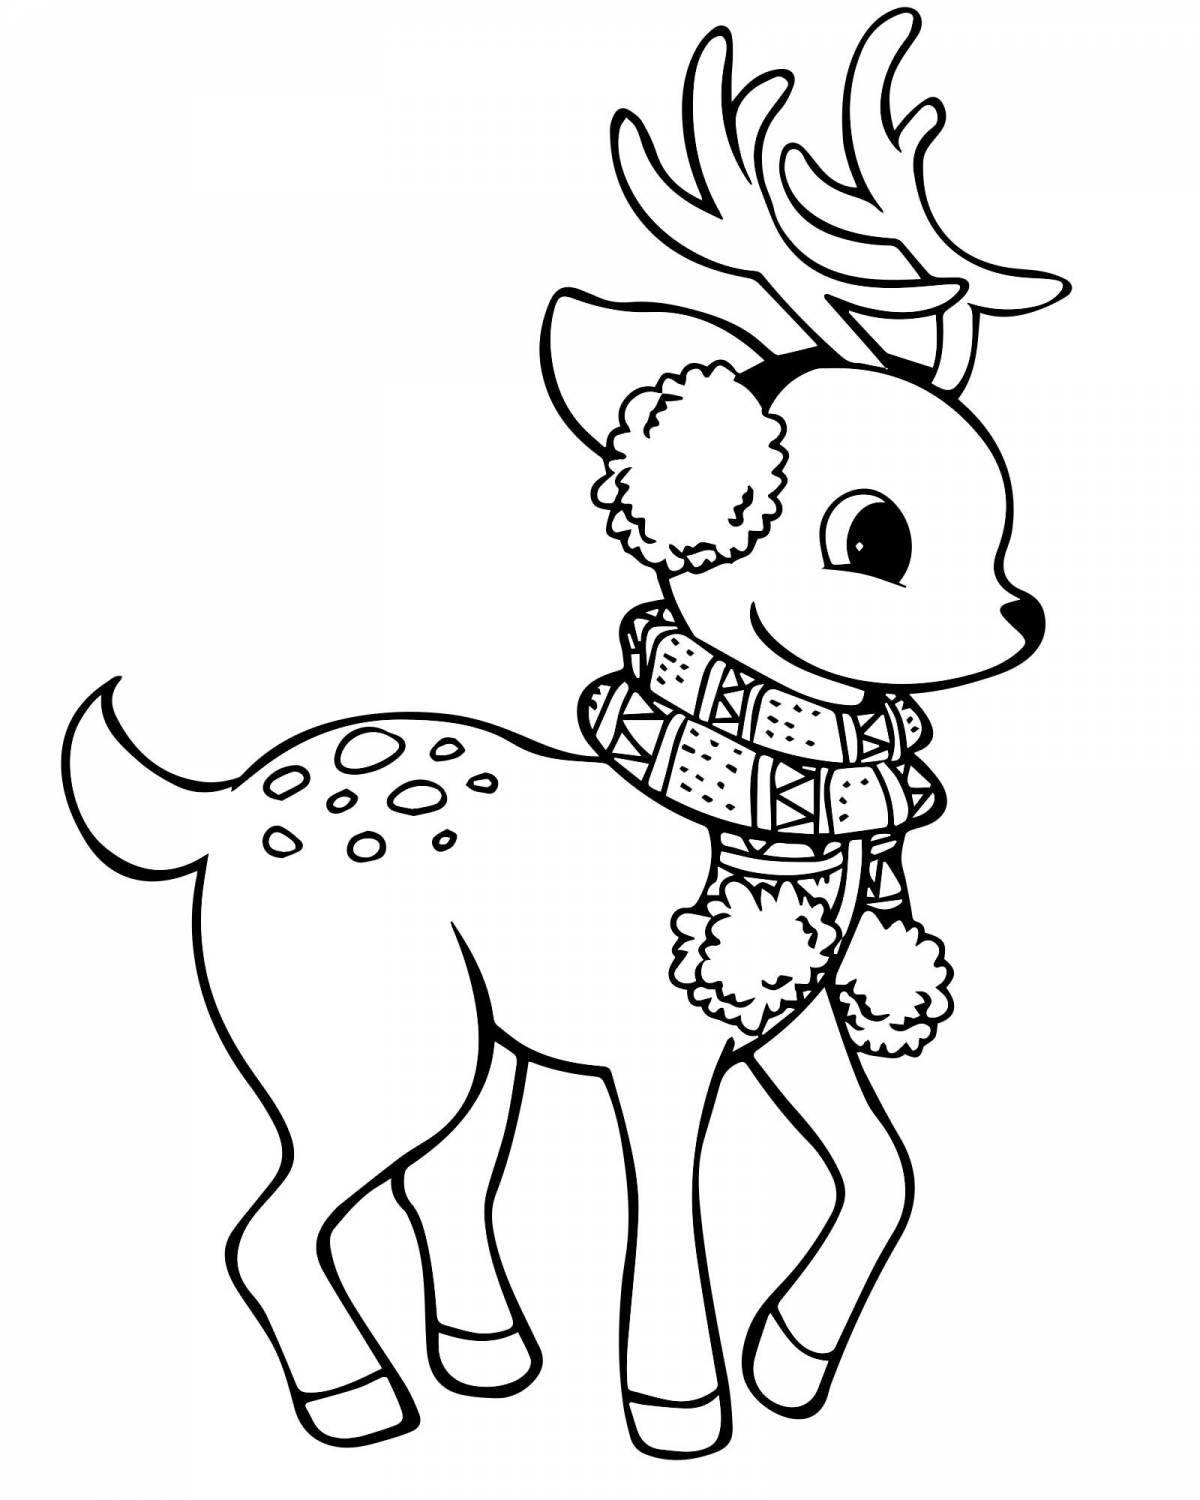 Coloring deer for kids